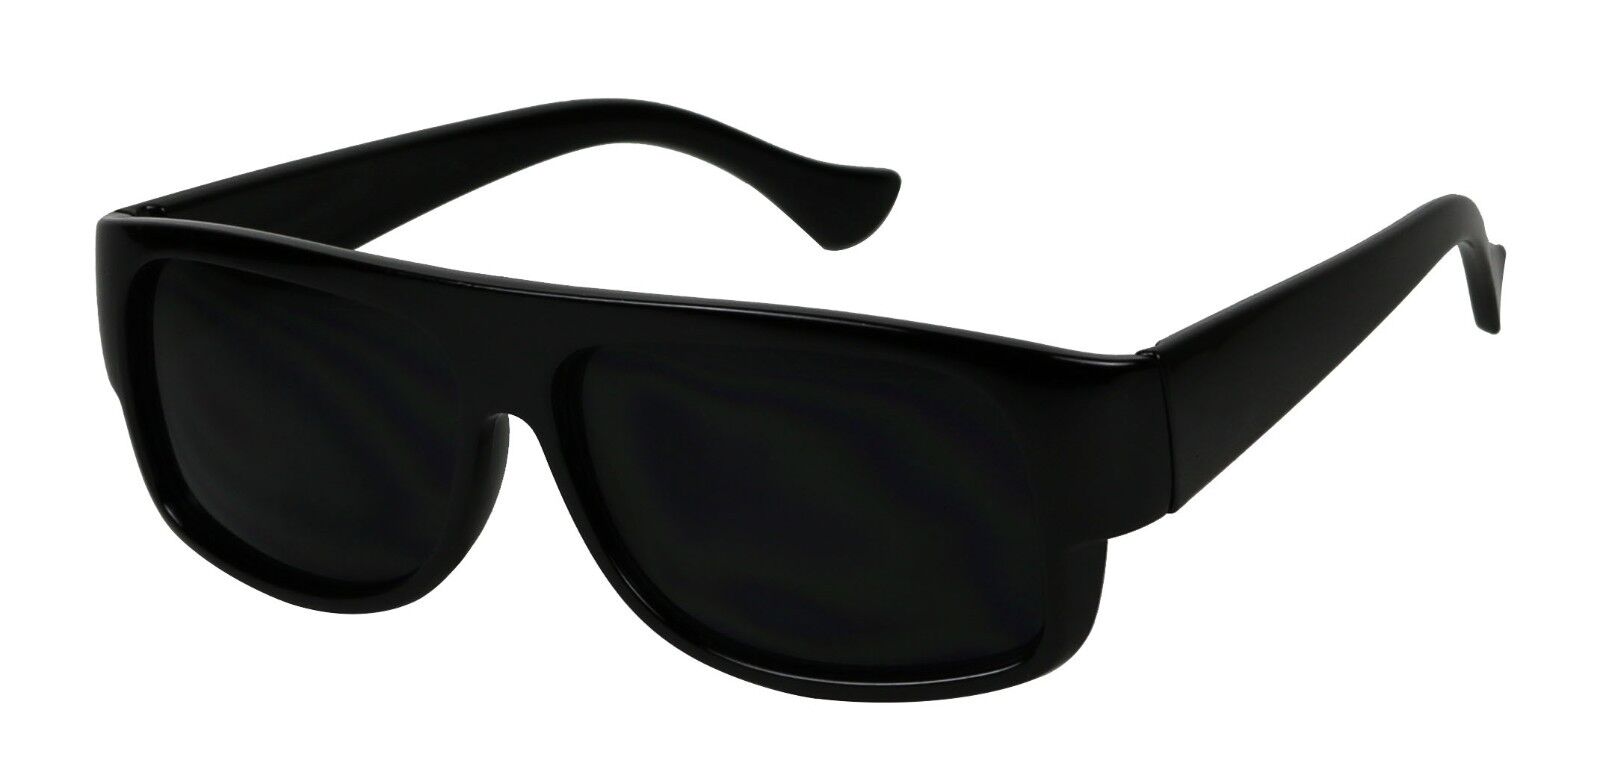 ULTRA super Extra DARK Black Sunglasses MEN WOMEN Aviator Nerd Geek Thug  WayFare